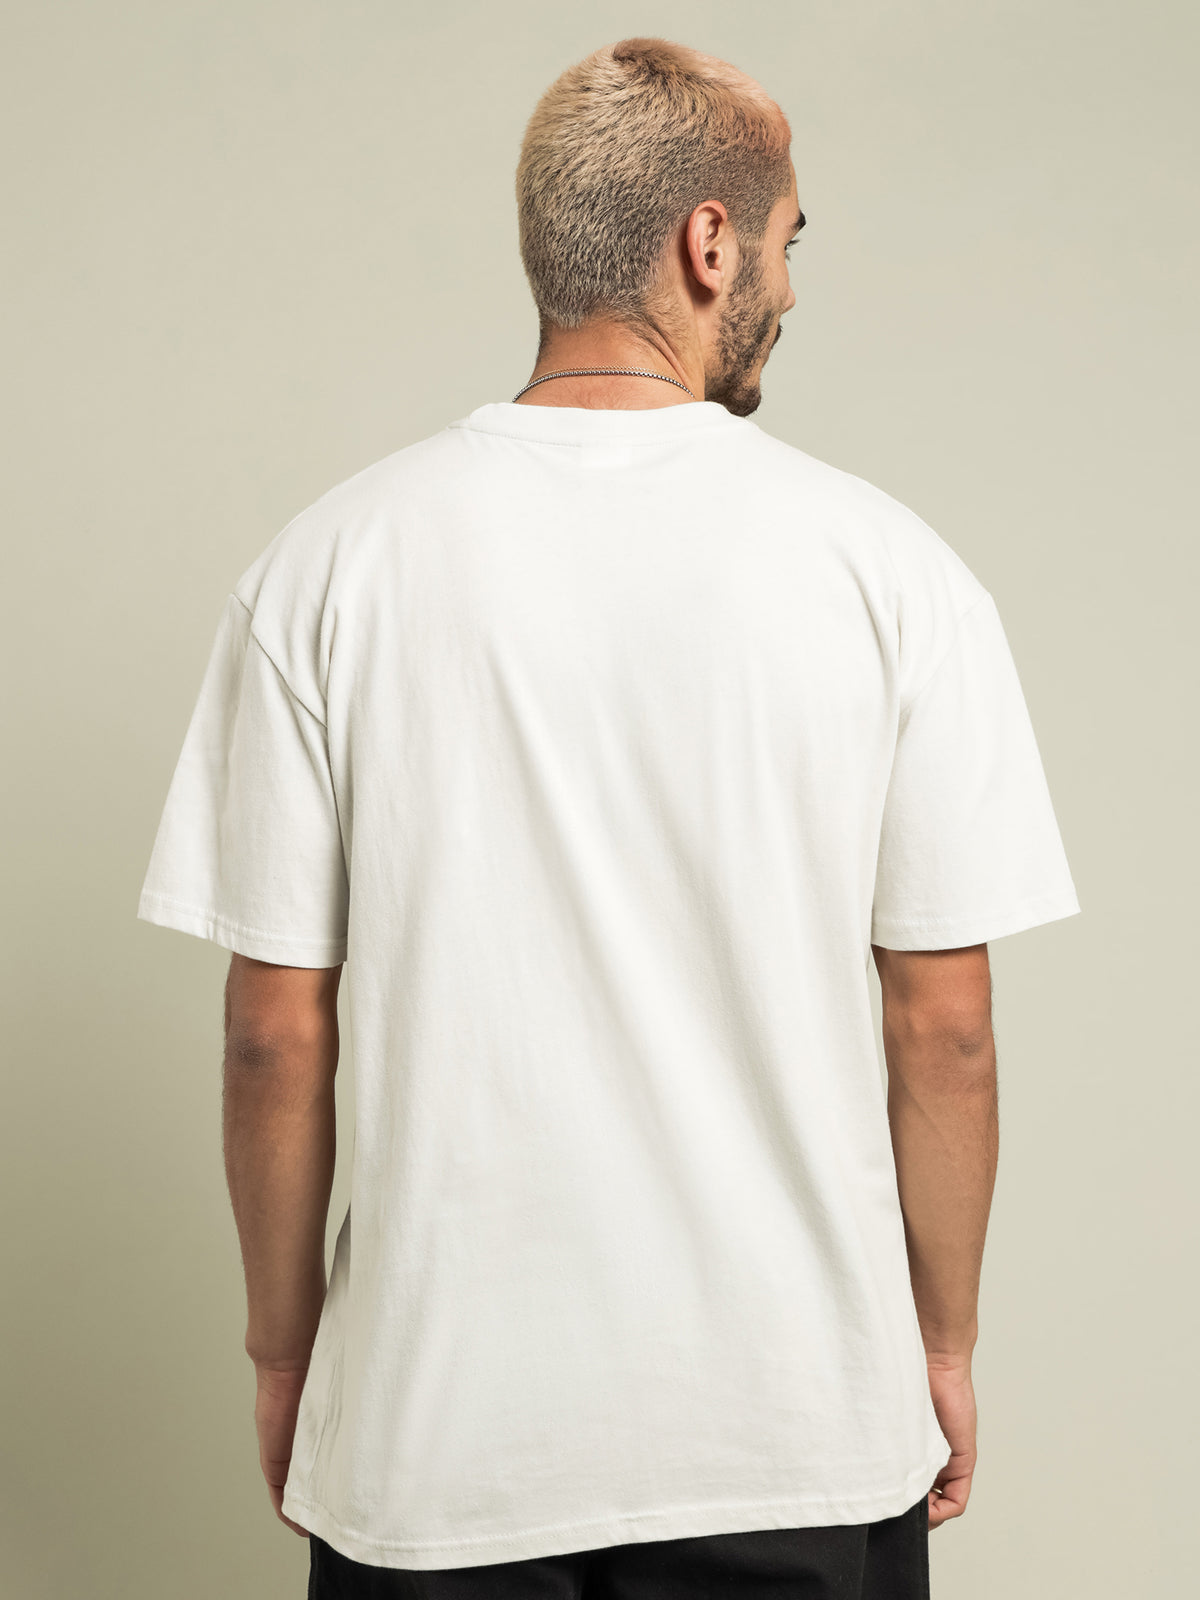 91 Short Sleeve T-Shirt in Light Grey Marle